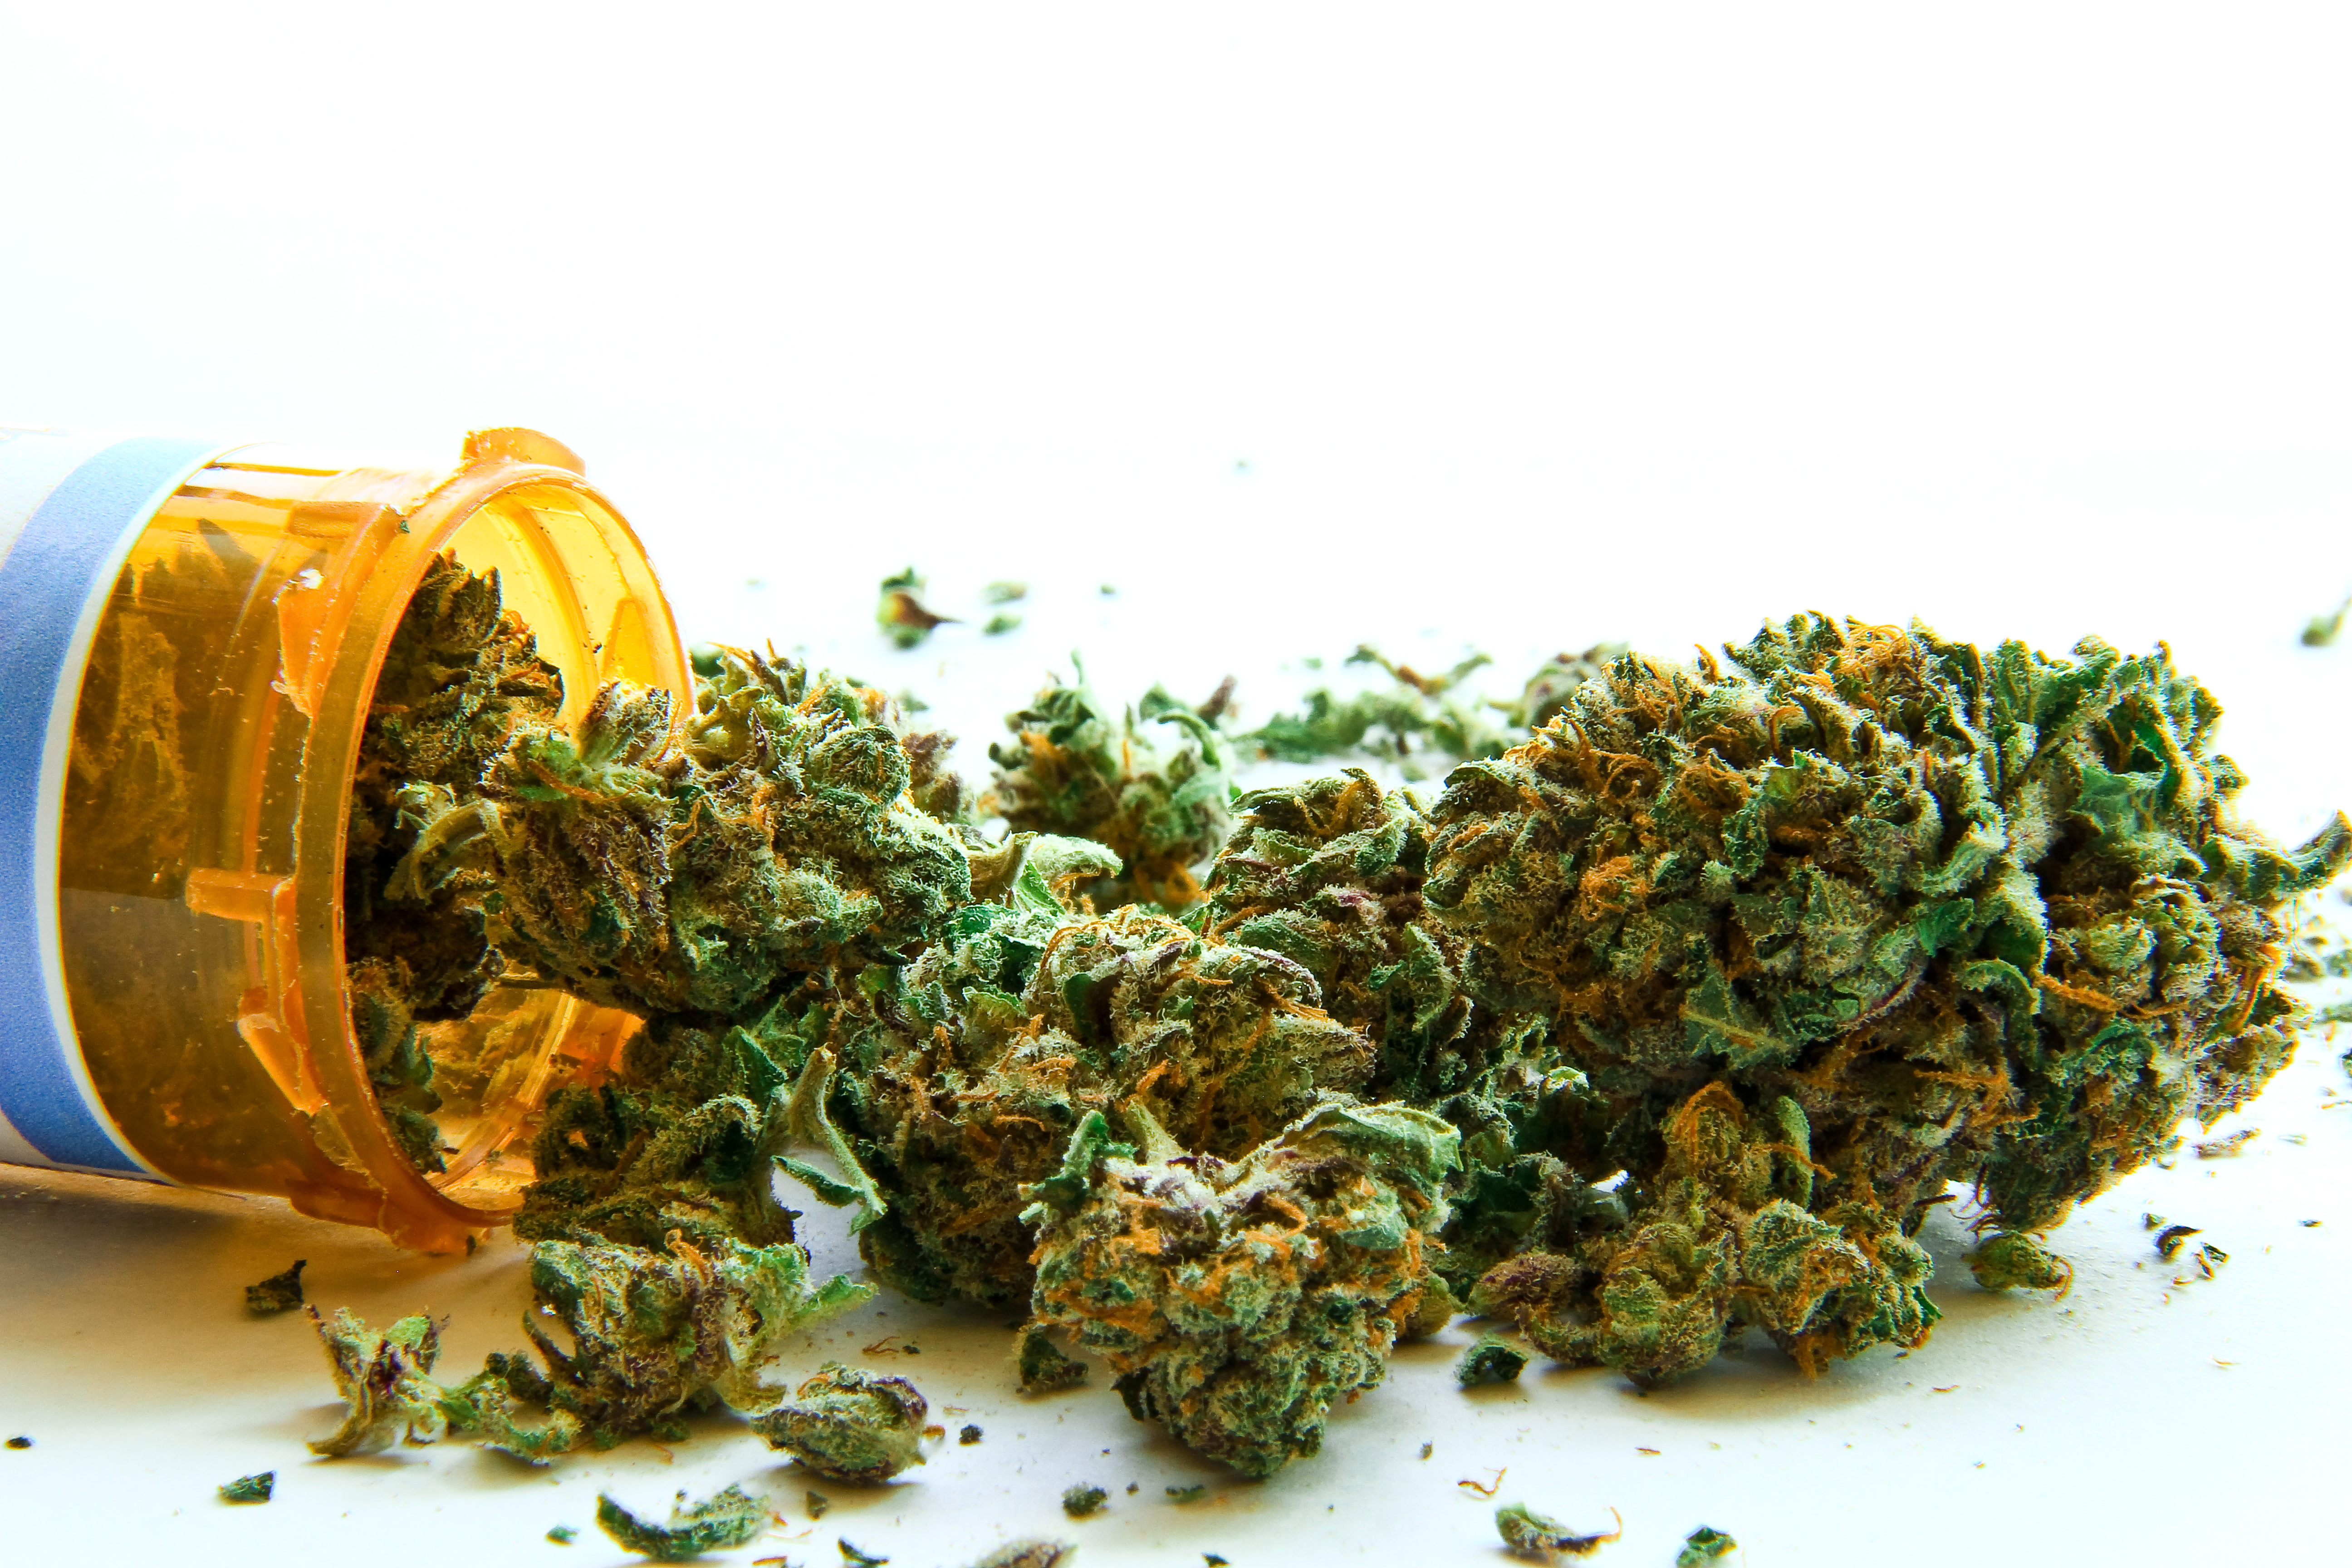 health benefits of cannabis - medical marijuana - medicinal marijuana - using cannabis safely - safe cannabis use - safe marijuana use - health benefits of pot